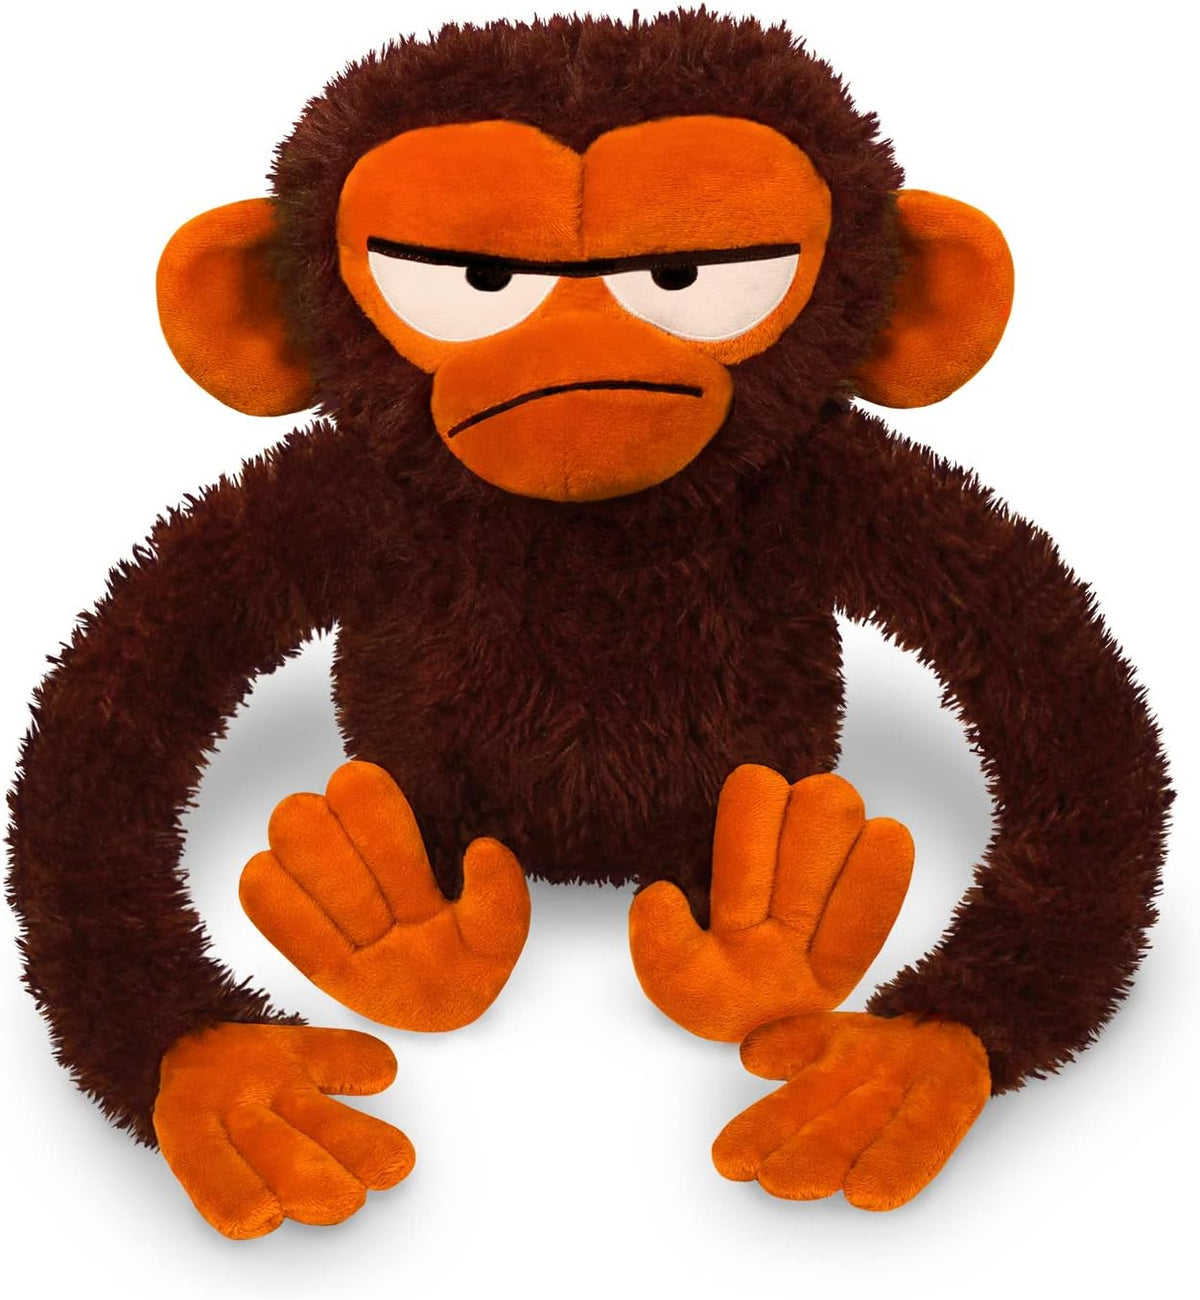 Grumpy Monkey Plush